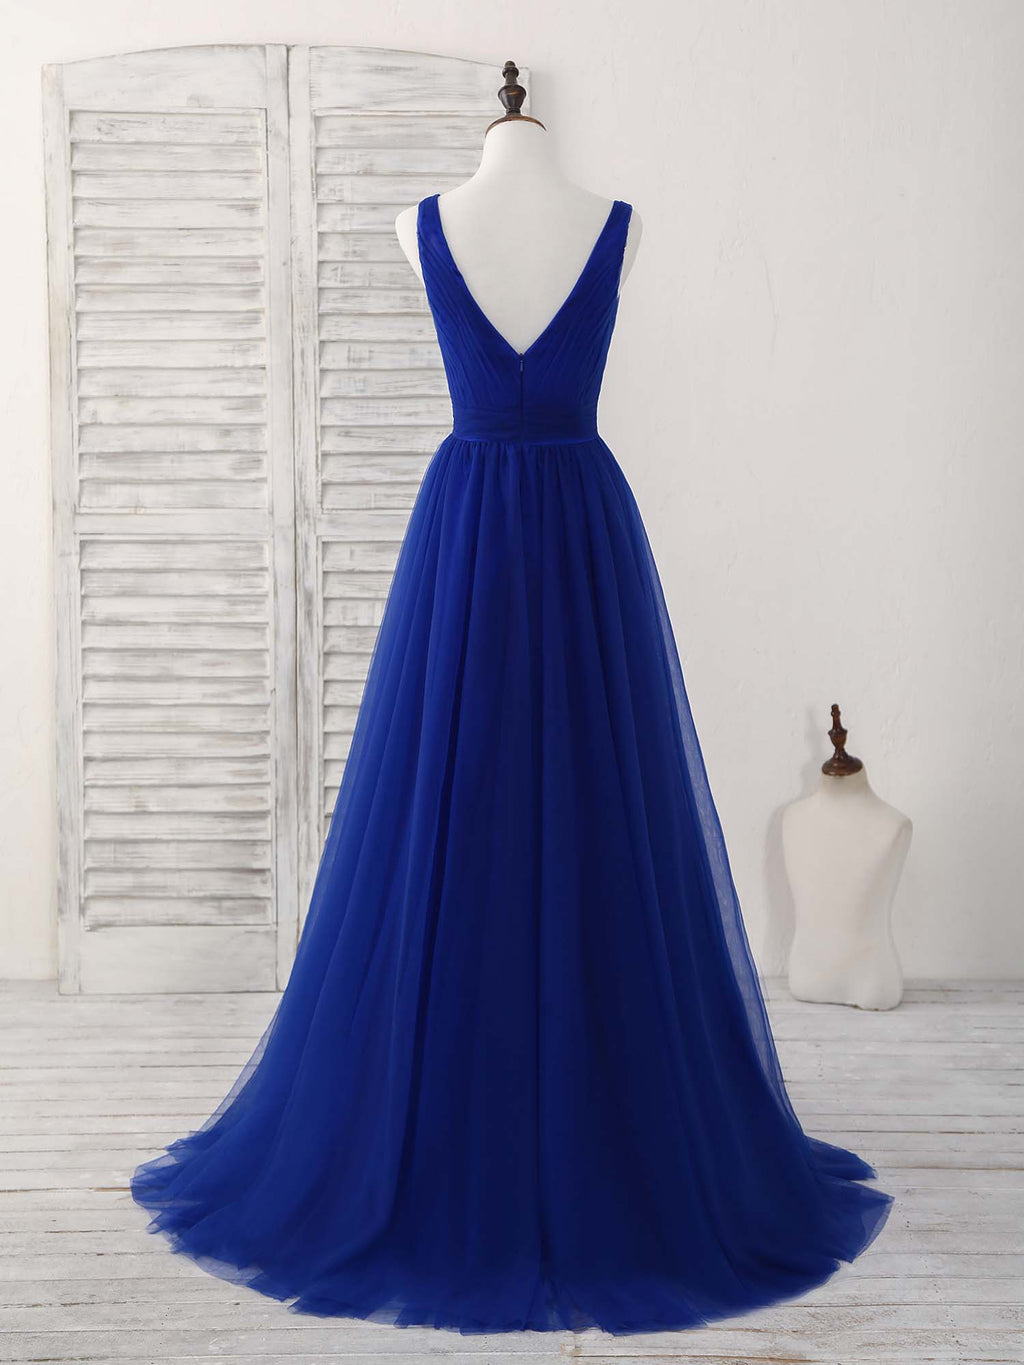 crystal design 2018 sleeveless deep v neck simple princess elegant ball gown  a line wedding dress open scoop back royal train (ivanna) bv | Wedding  Inspirasi